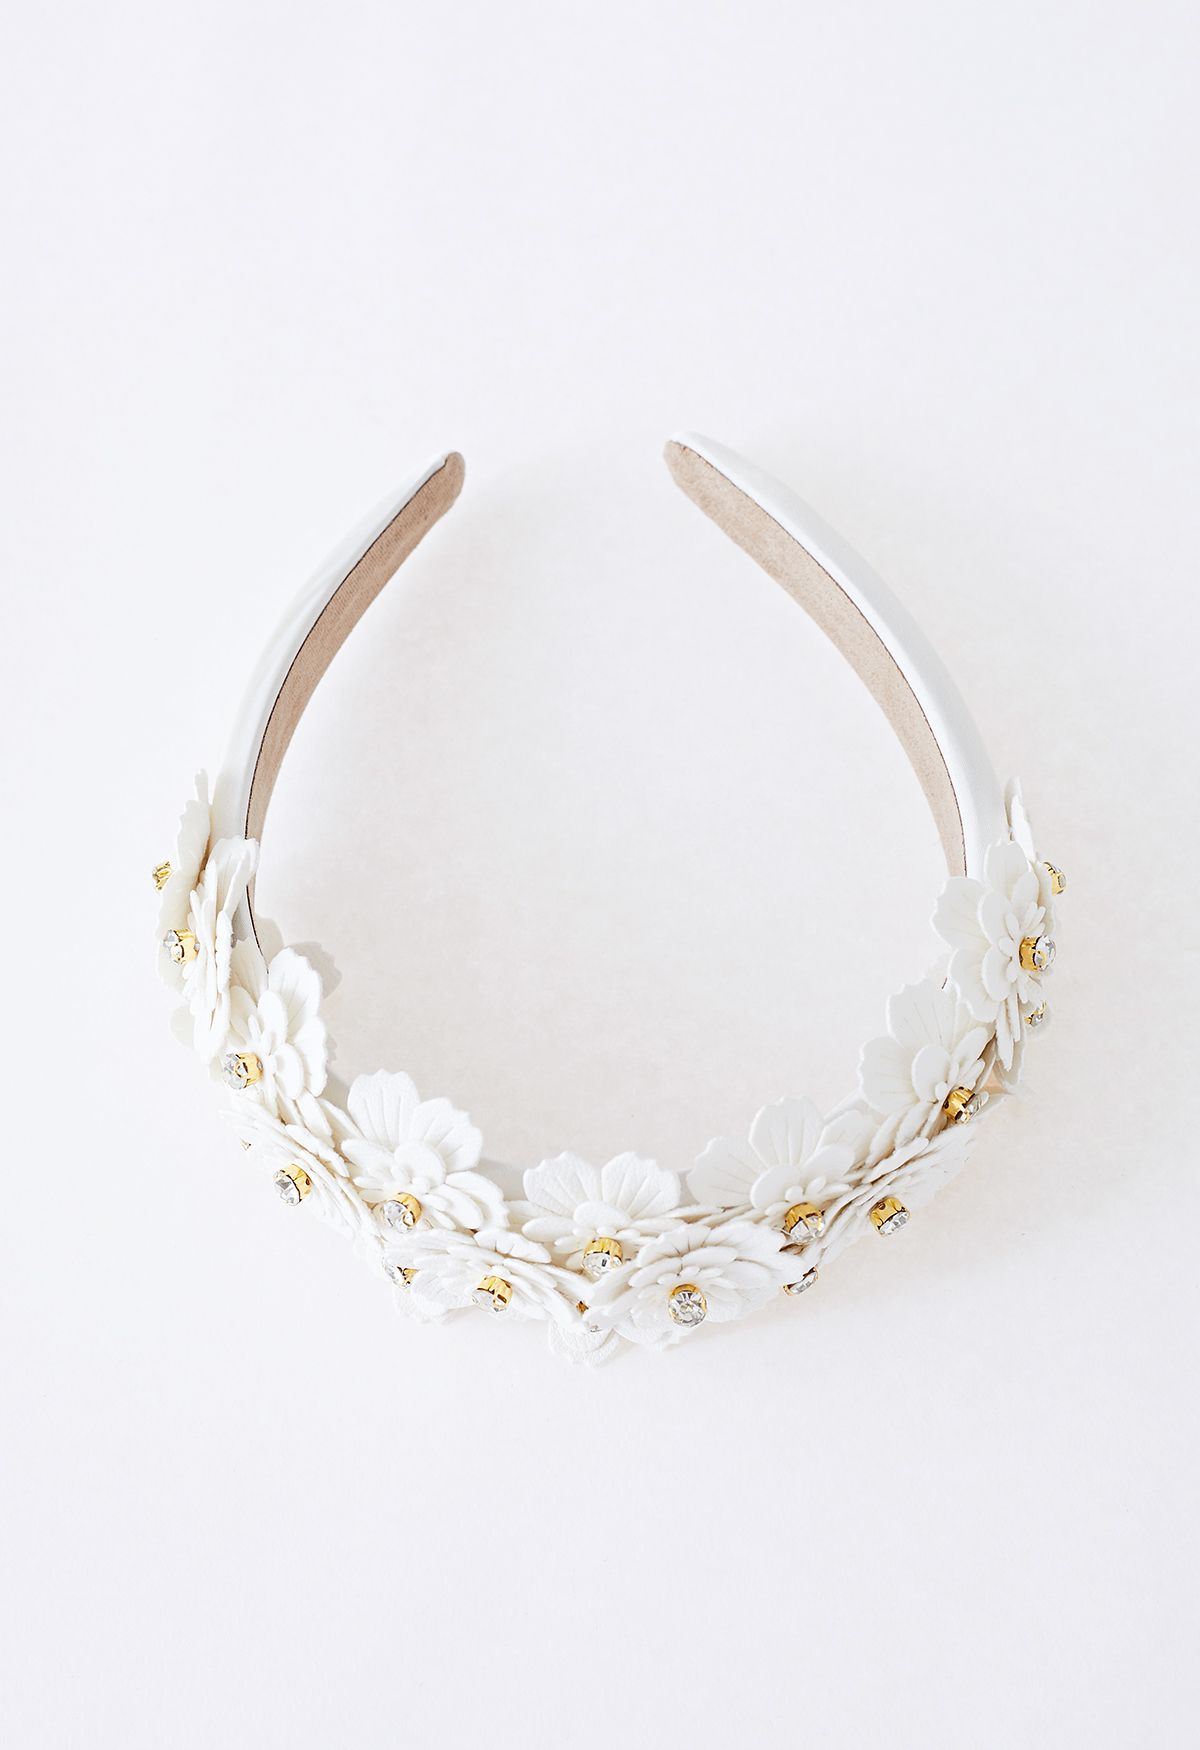 Rhinestone Floral Applique Headband in Ivory